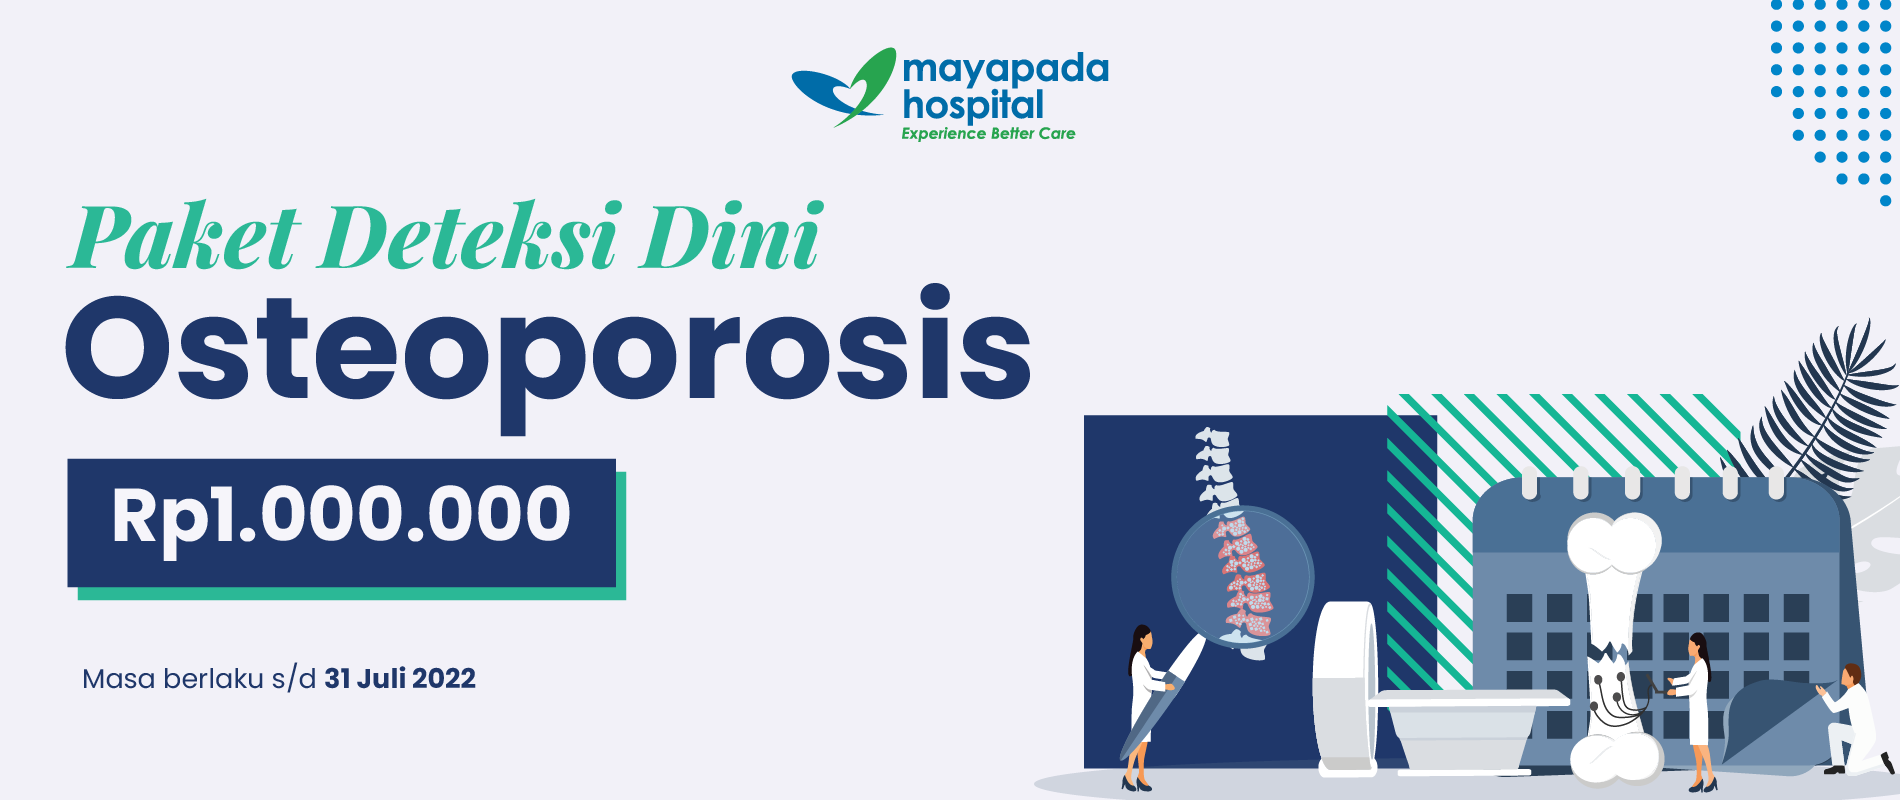 Paket Deteksi Dini Osteoporosis MHTG IMG